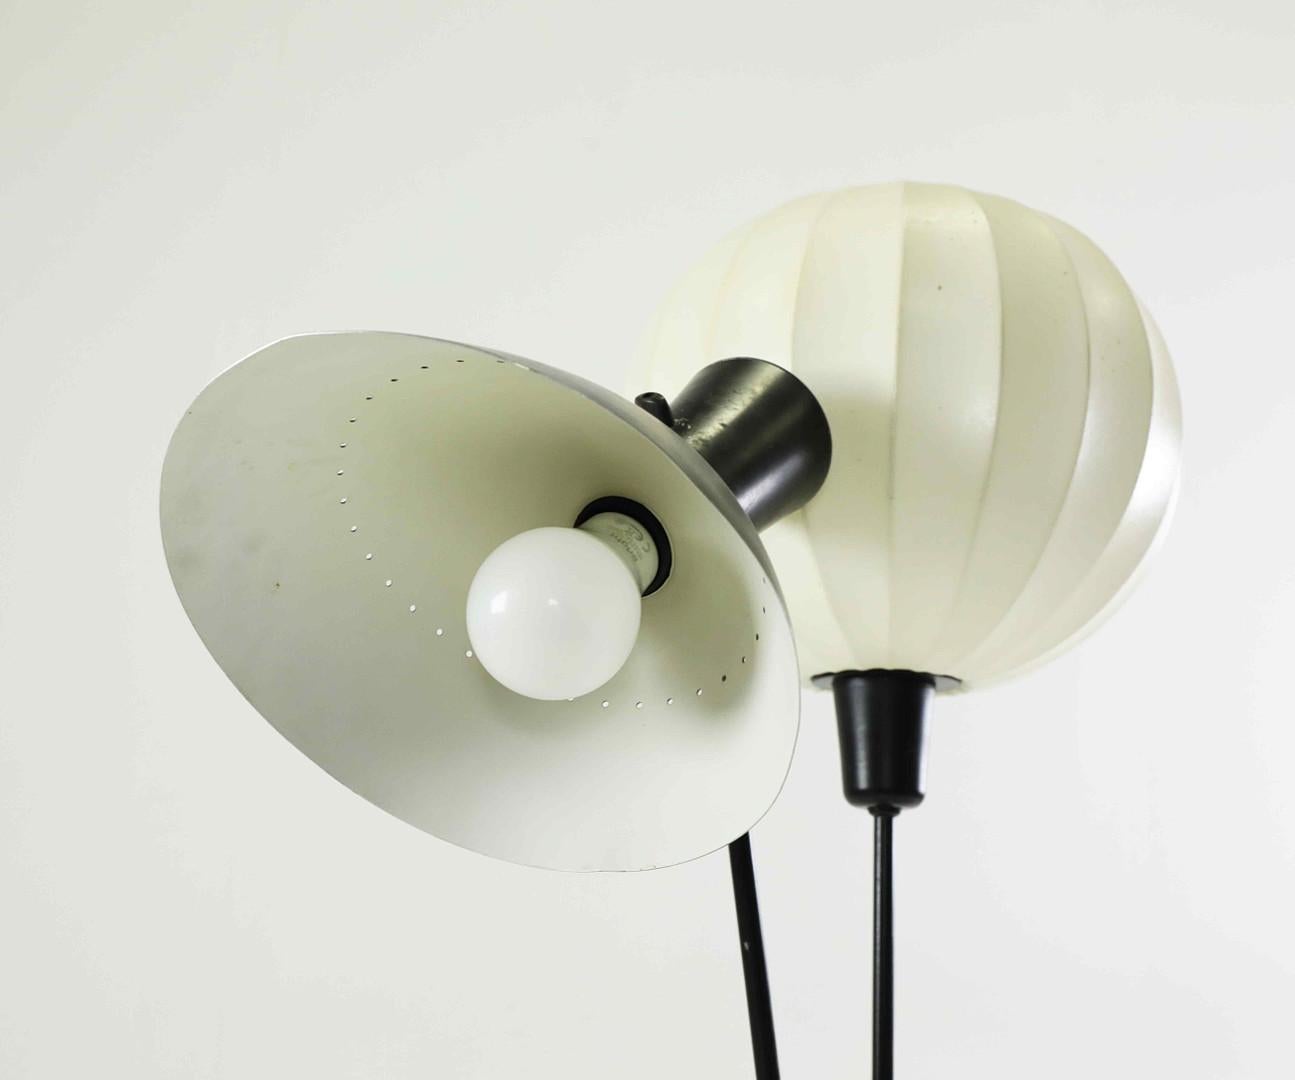 Scandinavian Modern Rare Floor Lamp by Hans Bergström for Ateljé Lyktan from the 1950s For Sale